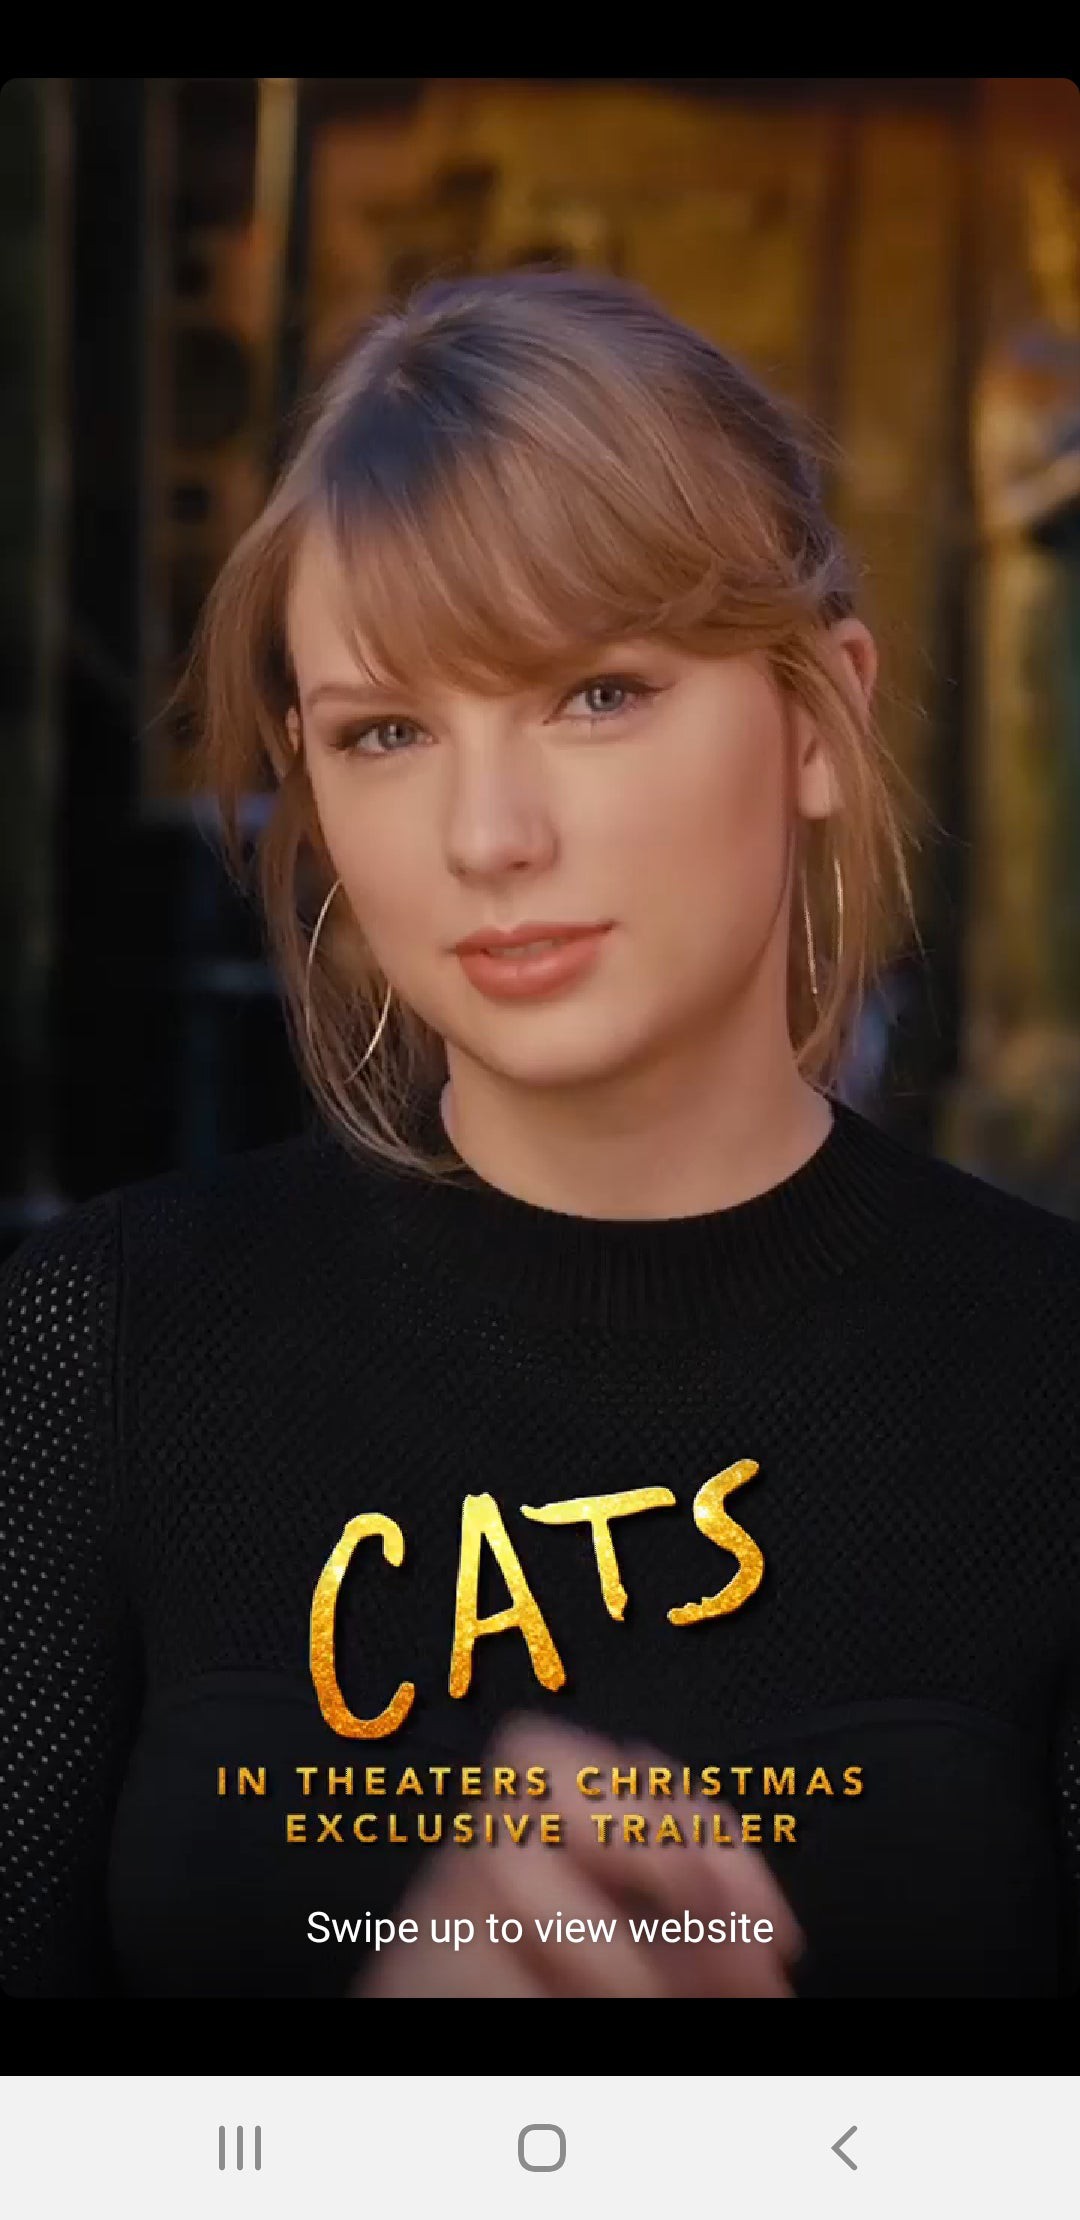 Promoción gatos | taylor swift: Ideas de atuendos de celebridades,  moda de celebridades,  traje de taylor swift,  Taylor Swift,  Los mejores momentos de Taylor,  vestidos tumblr  